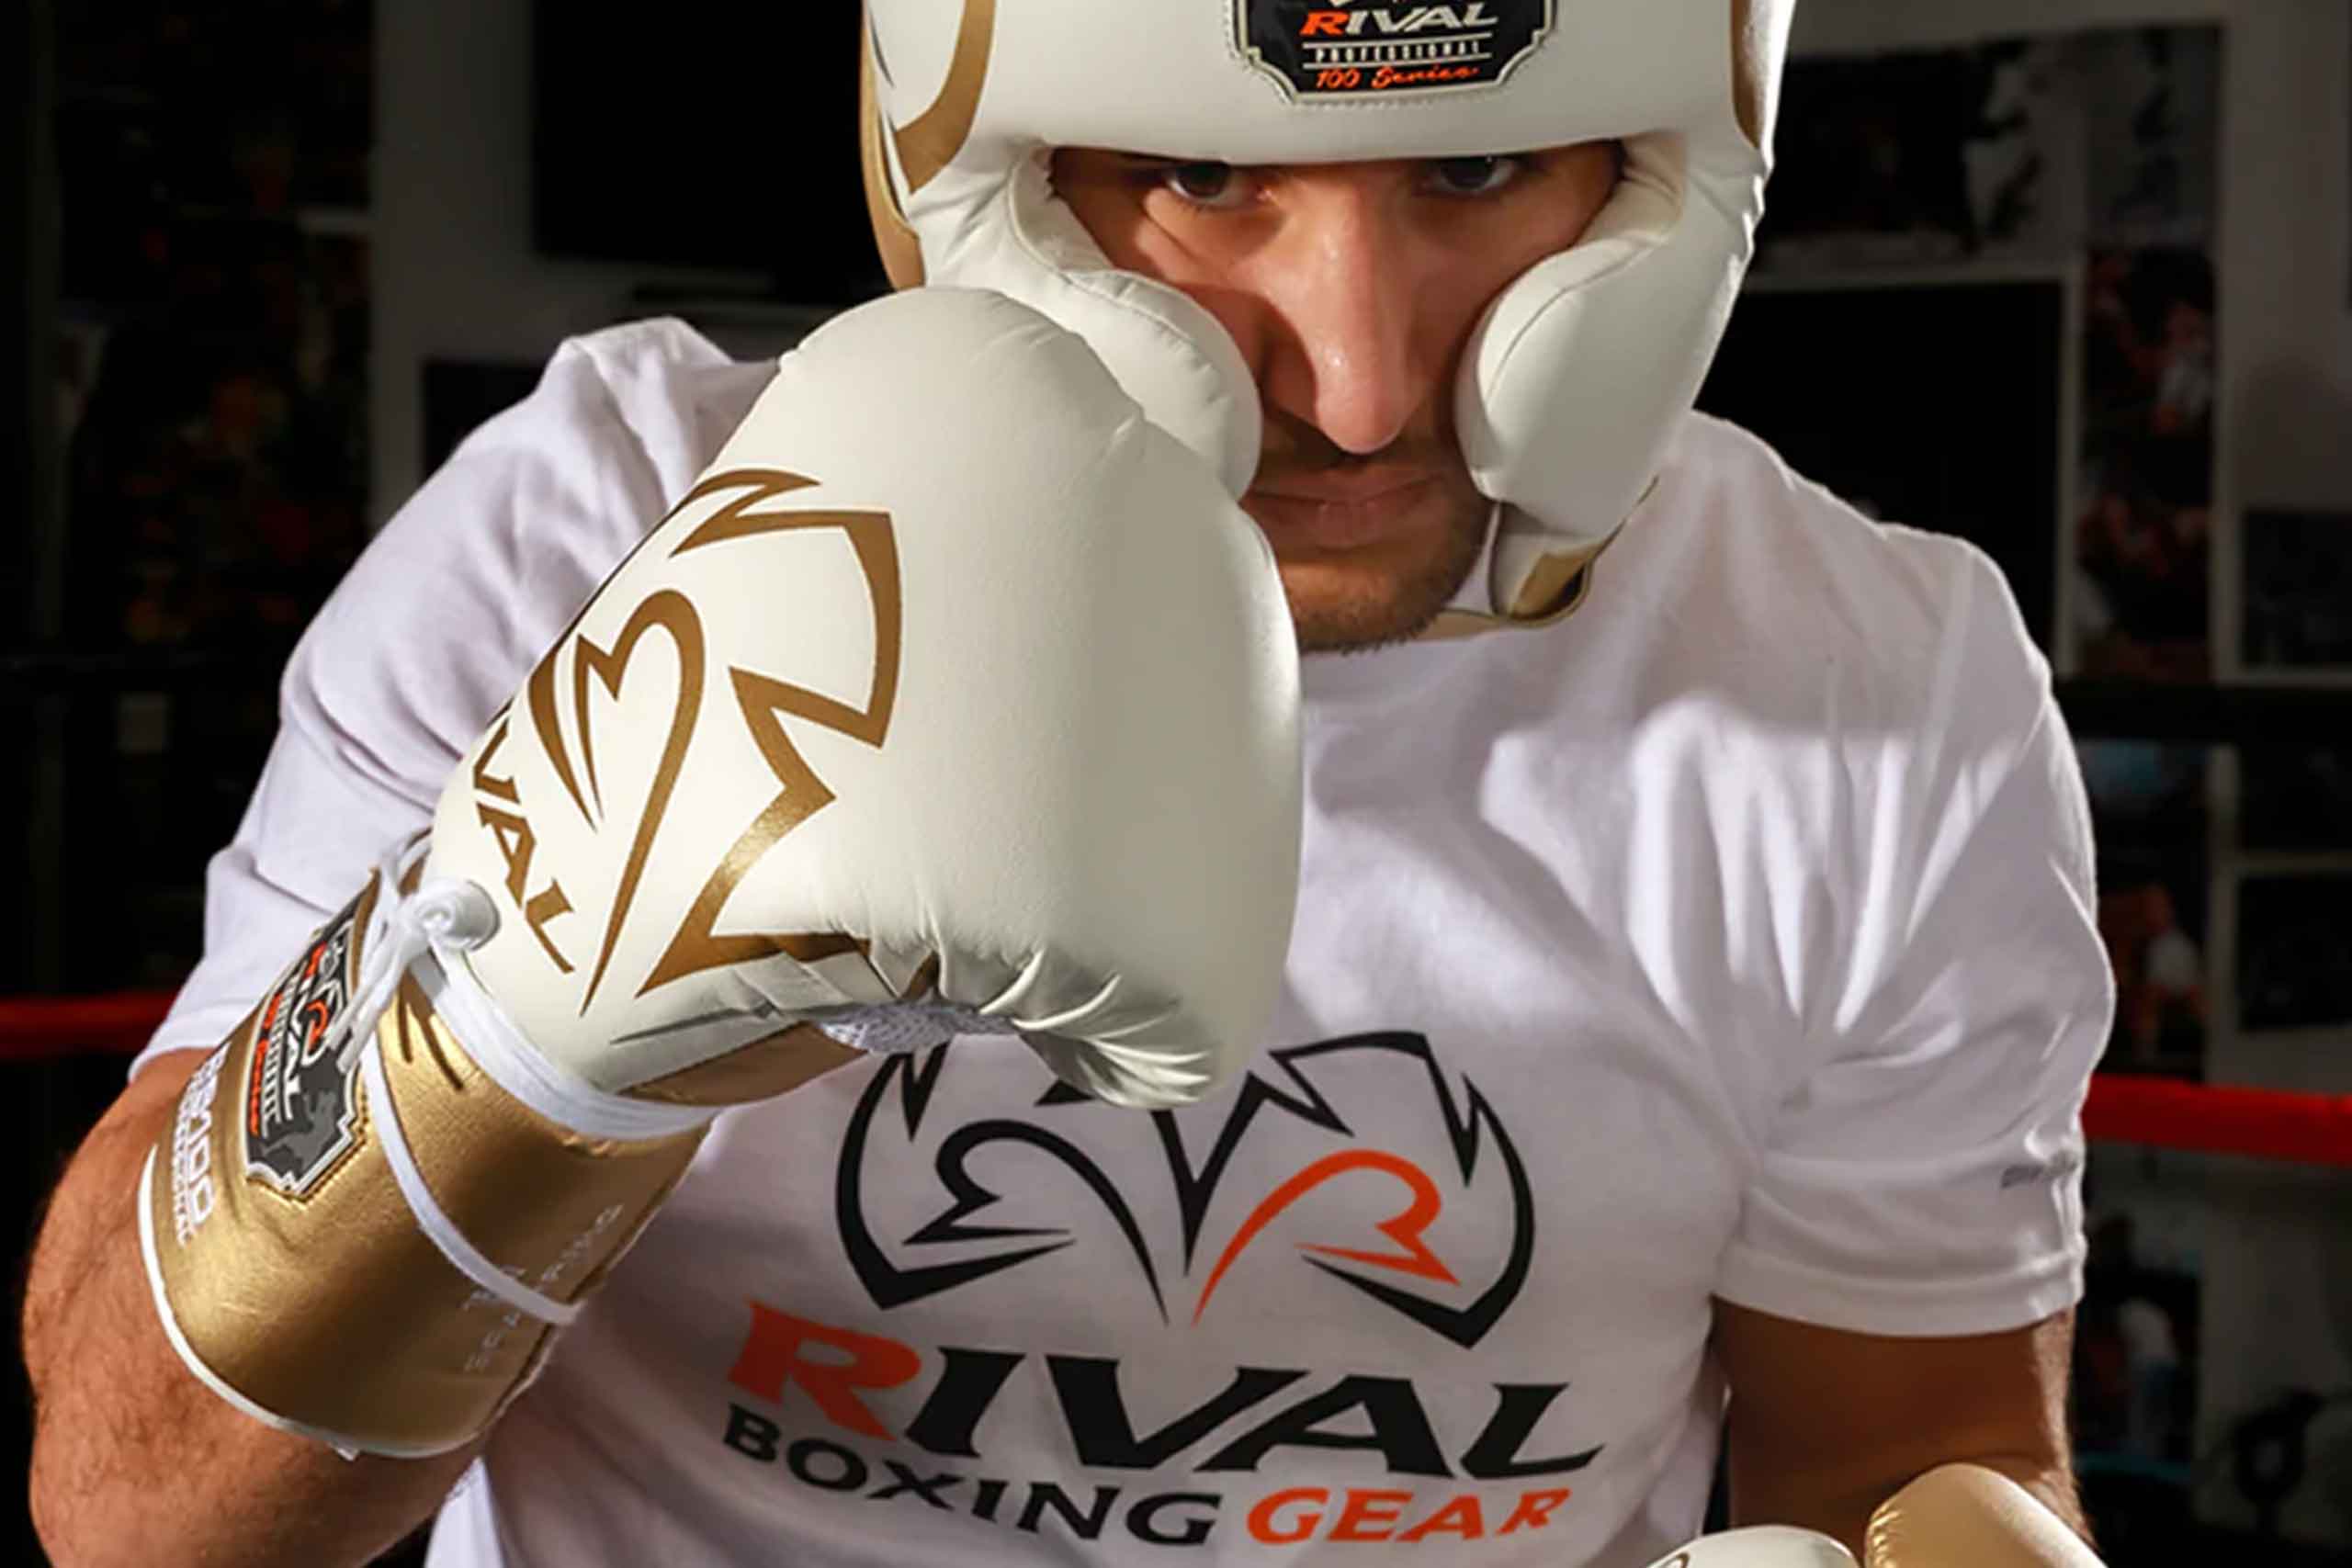 rival boxing gear shop las vegas